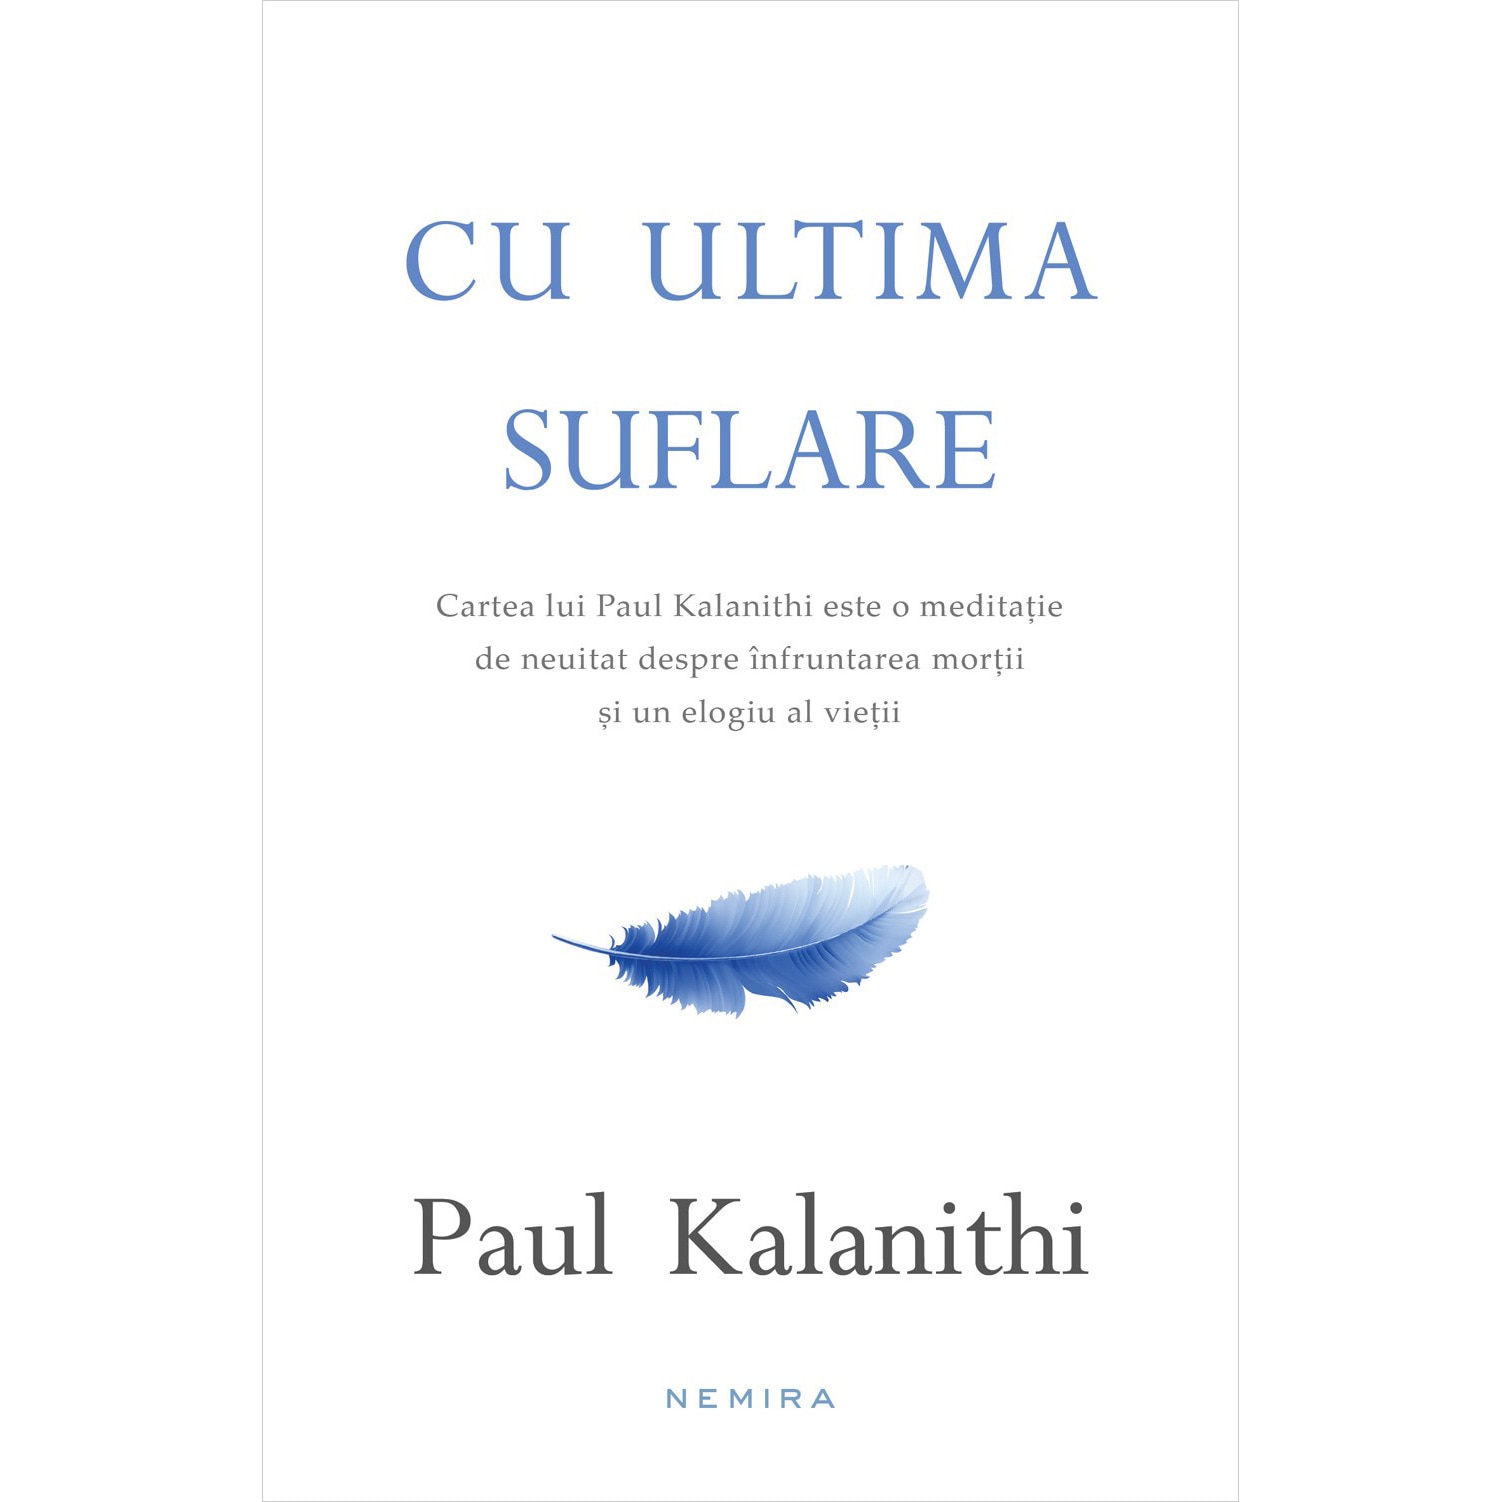 Cursed Violate Forensic medicine Cu ultima suflare - Paul Kalanithi - eMAG.ro